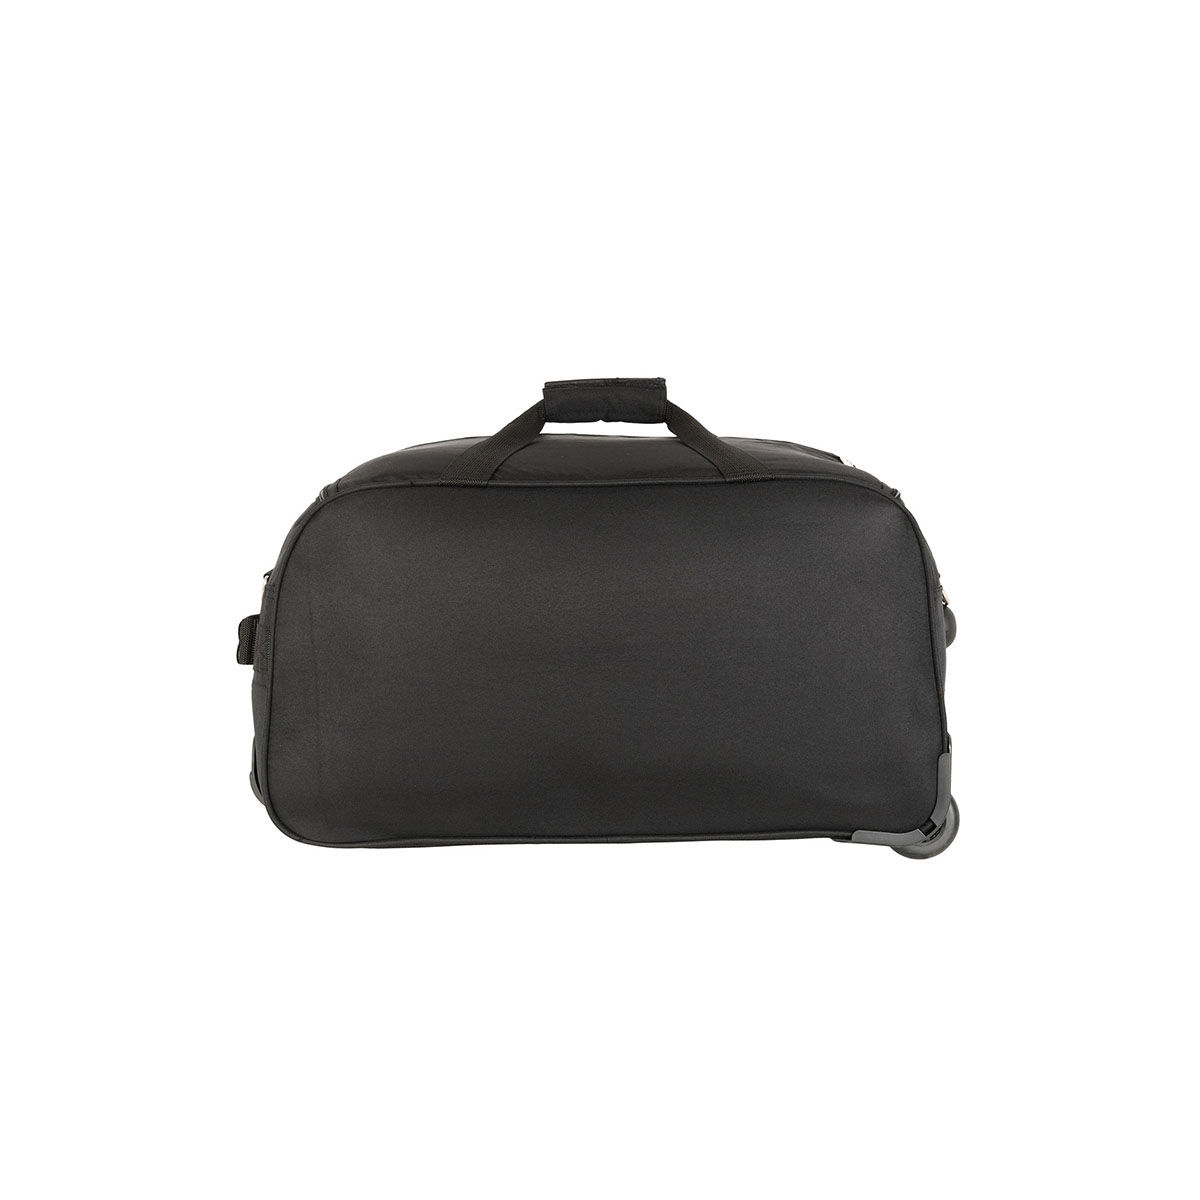 Plain Black Leather Duffle Bag at Rs 1500 | लैदर डफल बैग in Delhi | ID:  20501630997